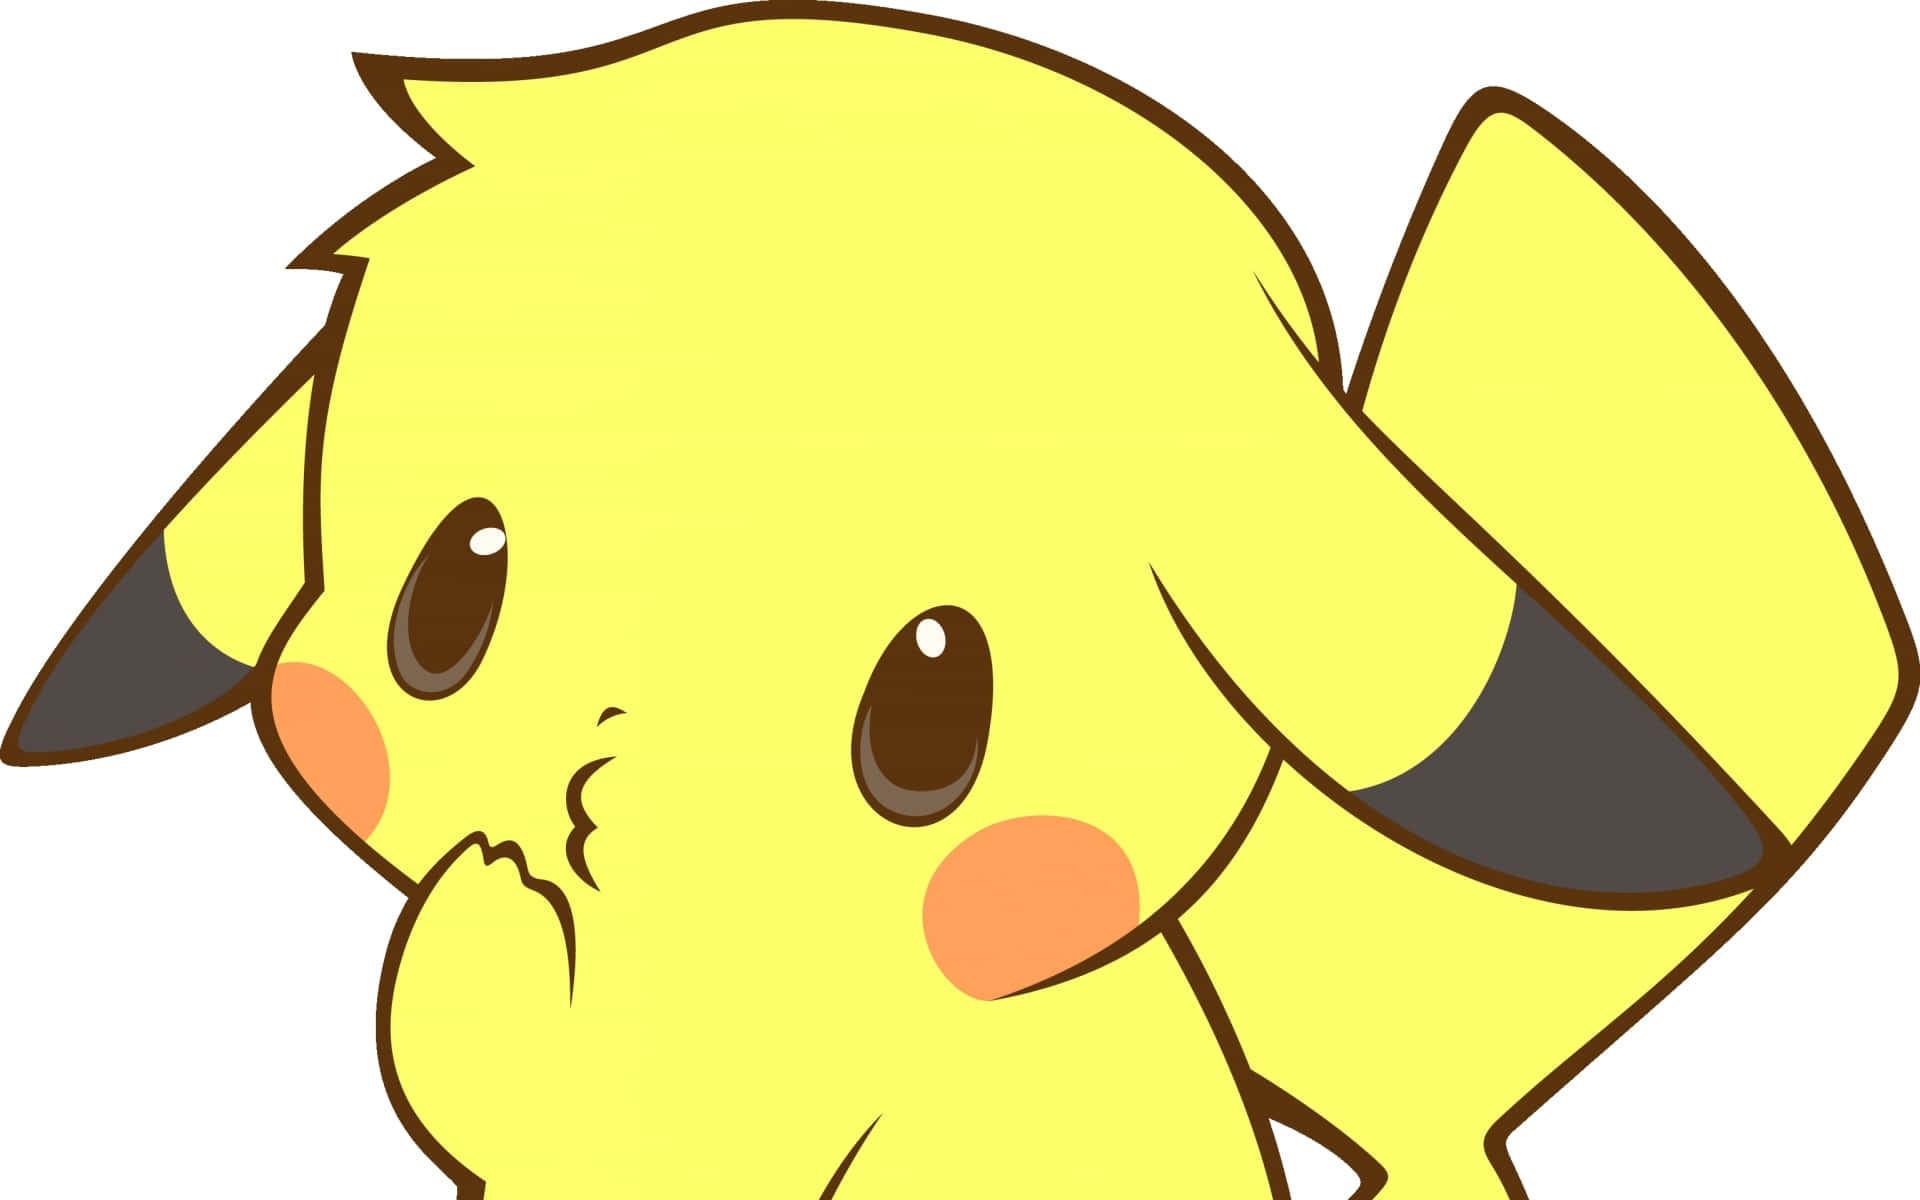 Cute Pikachu Illustration Wallpaper